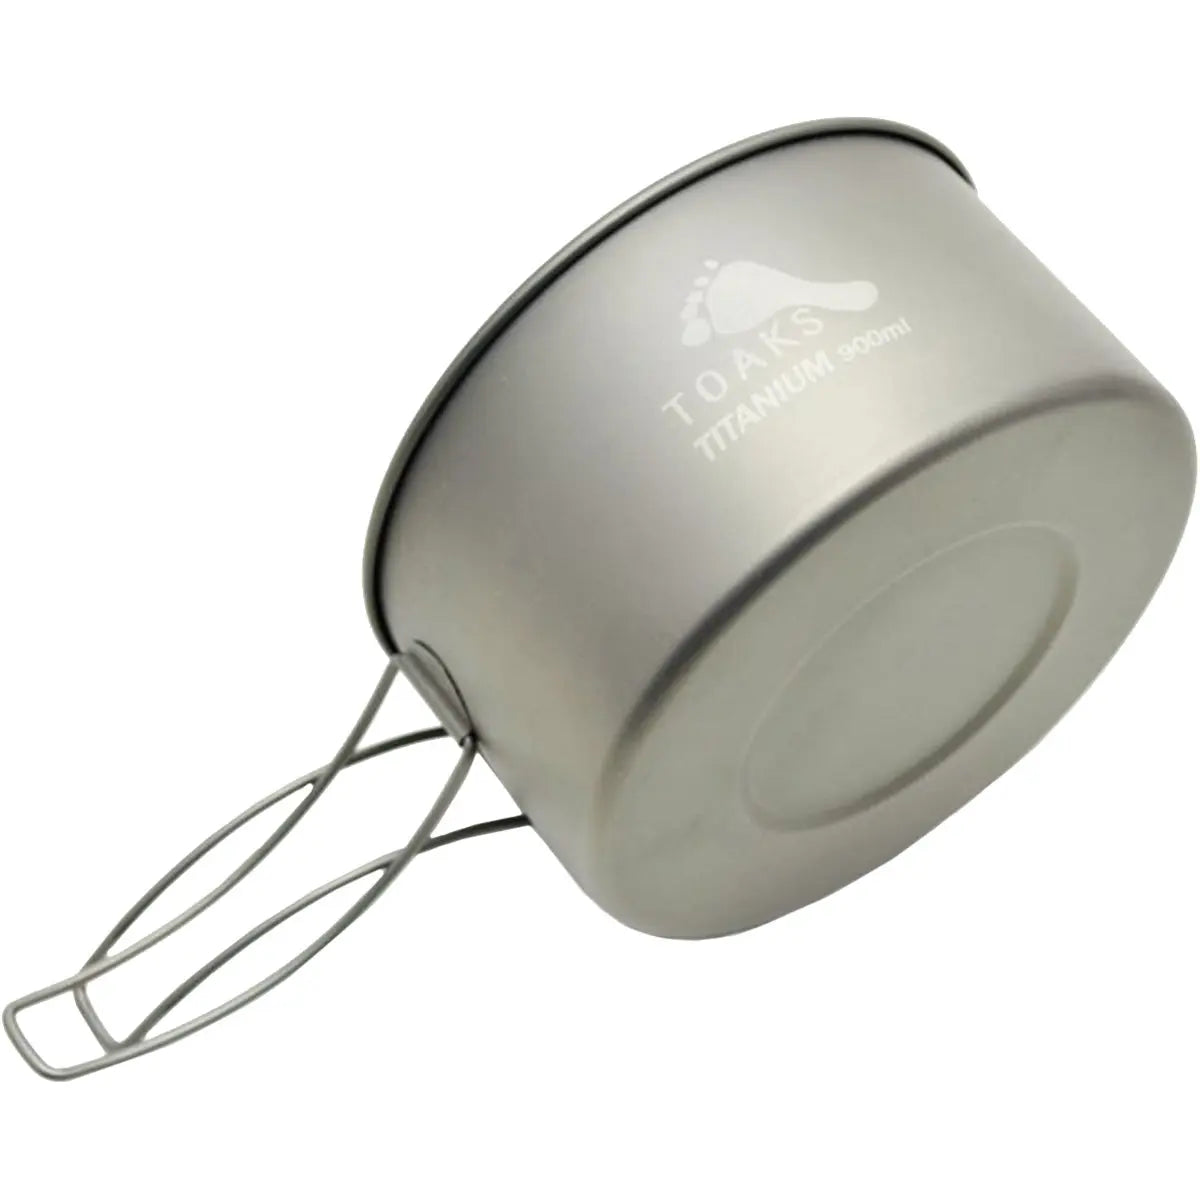 TOAKS Titanium 900ml D130 Ultralight Camping Cook Pot w/ Heat Resistant Handles TOAKS